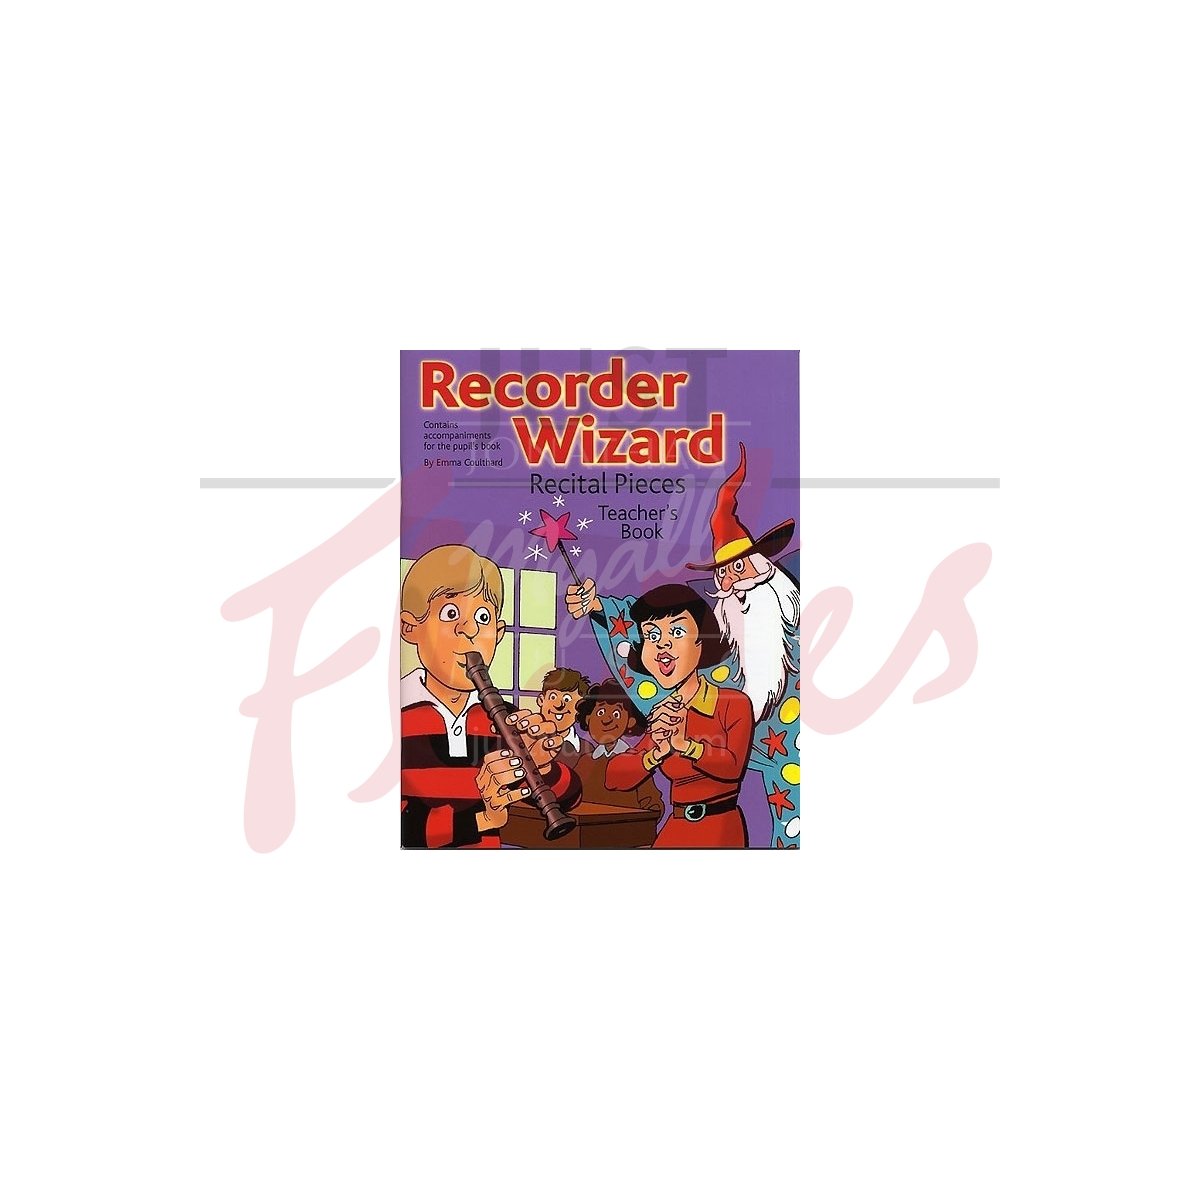 Recorder Wizard Recital Pieces [Teacher's Book]